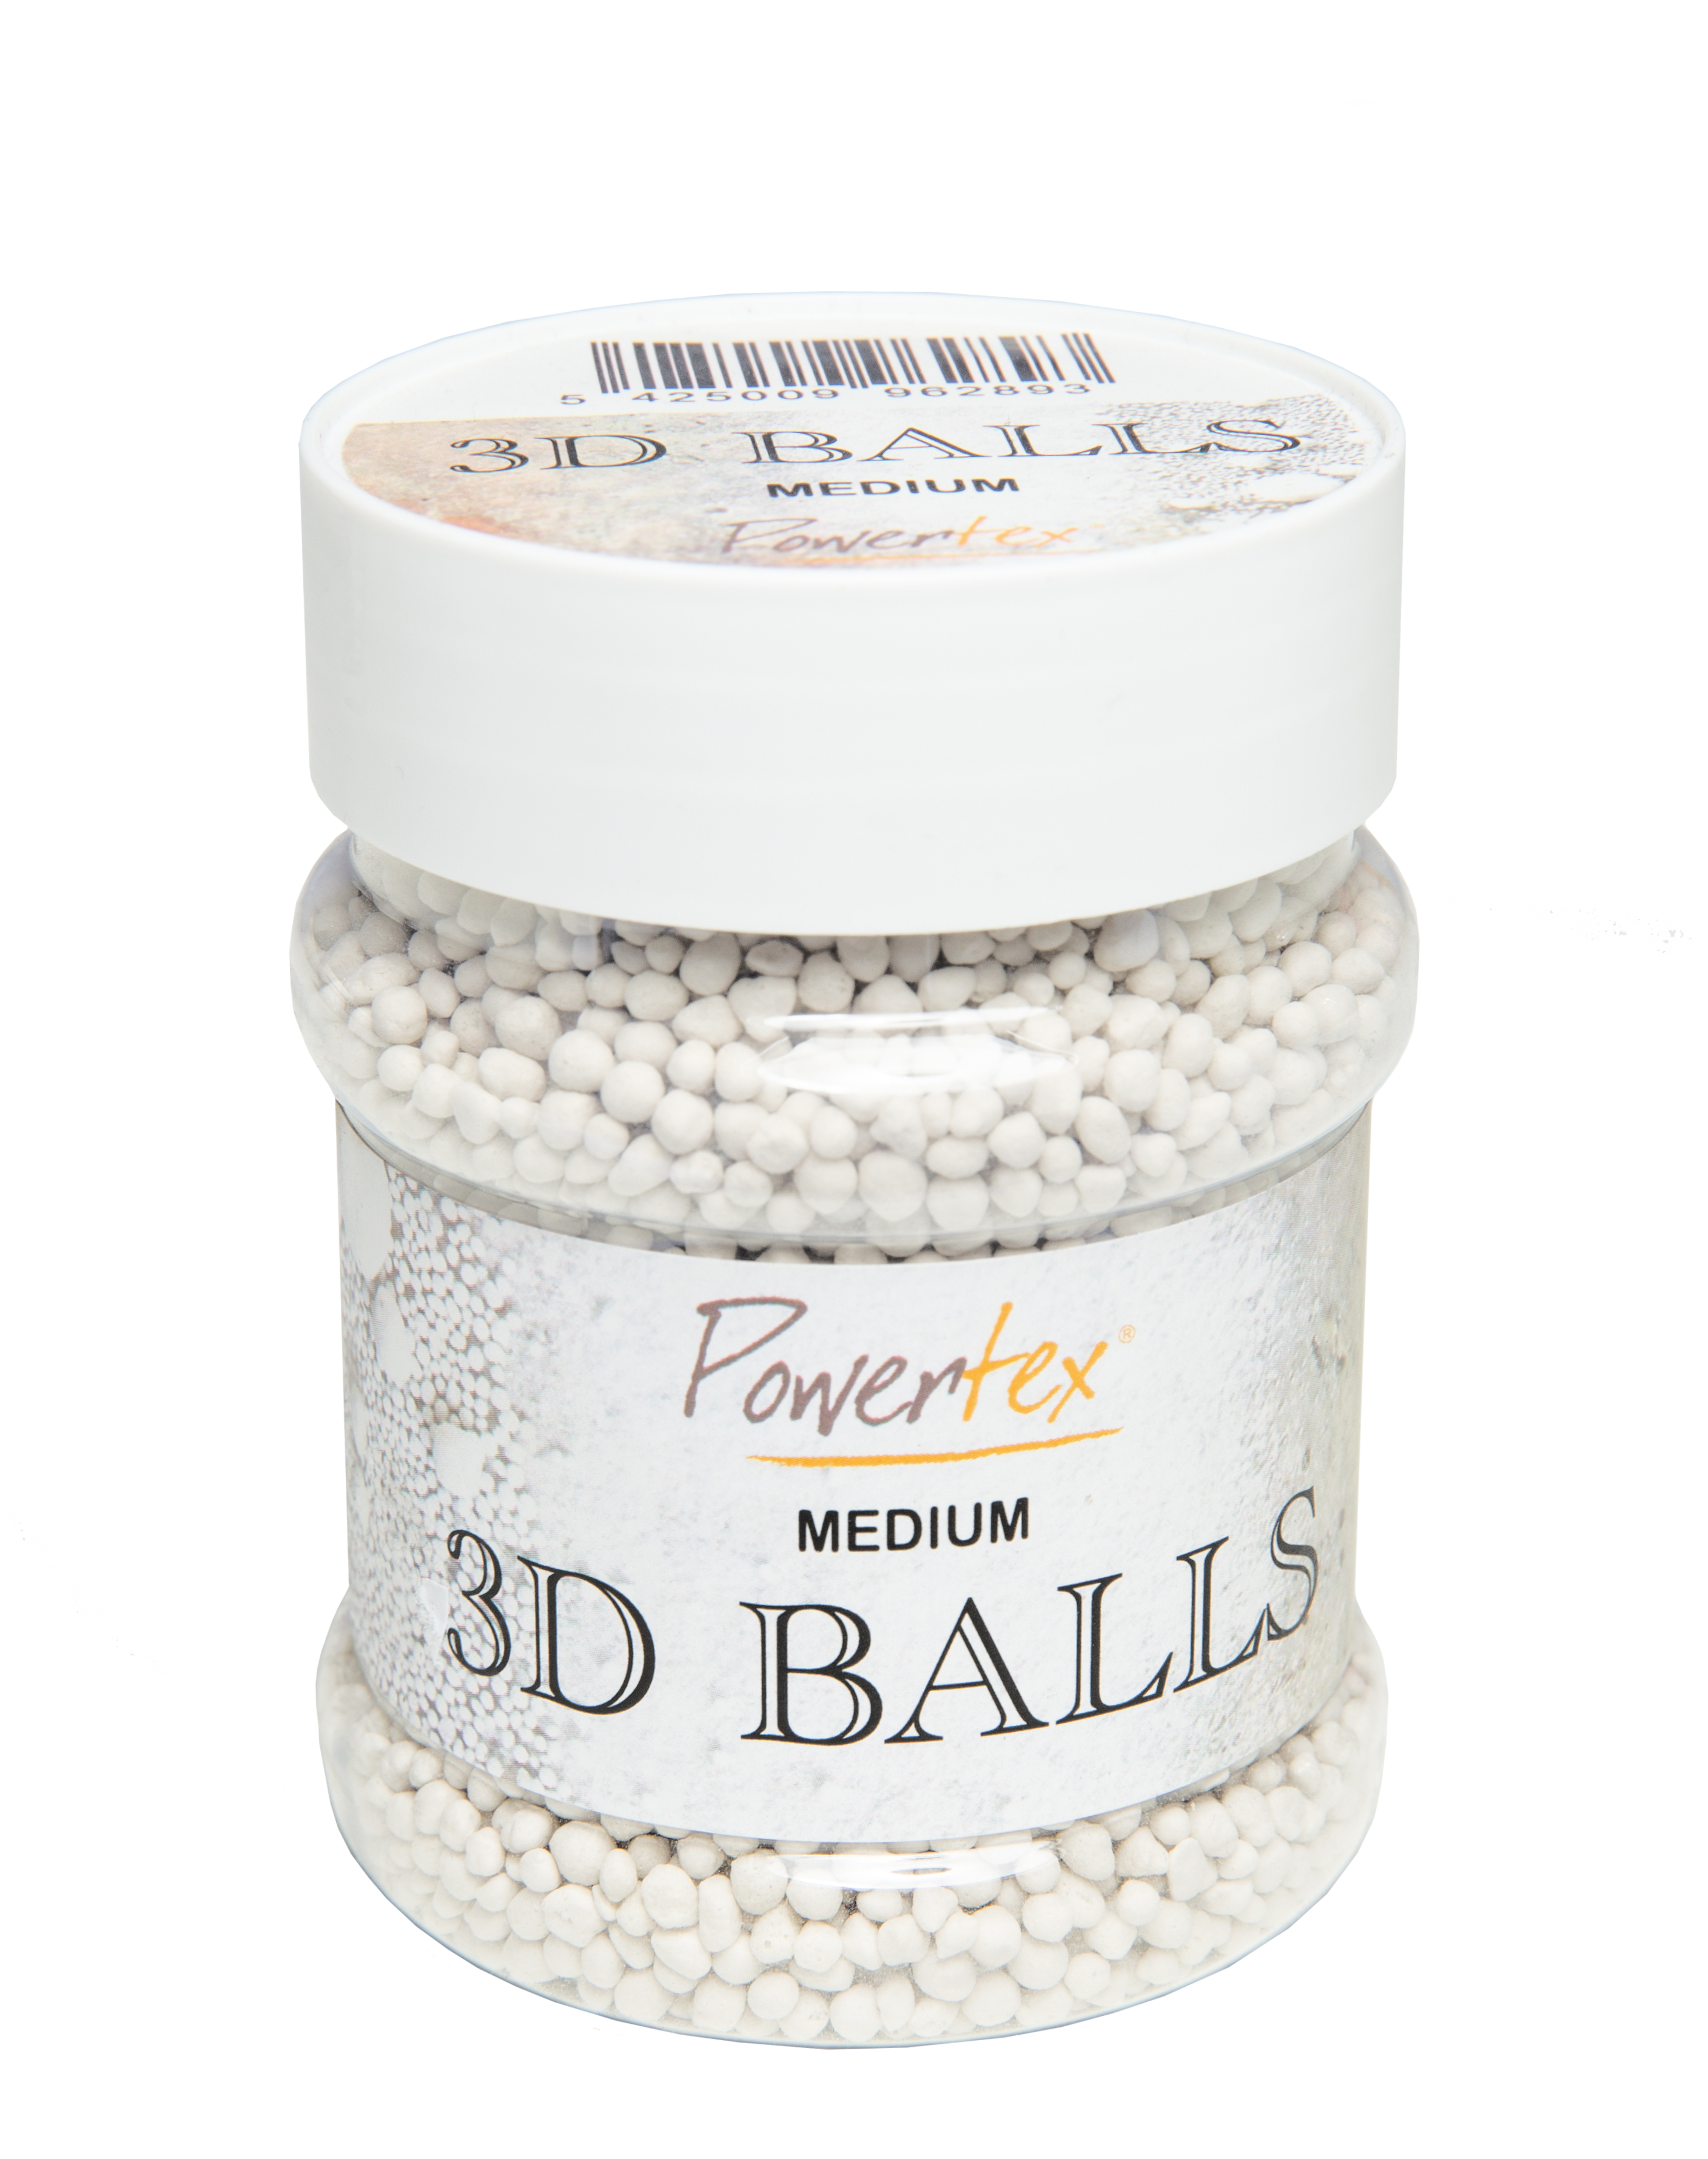 Powertex 3D-Balls medium, 230 ml